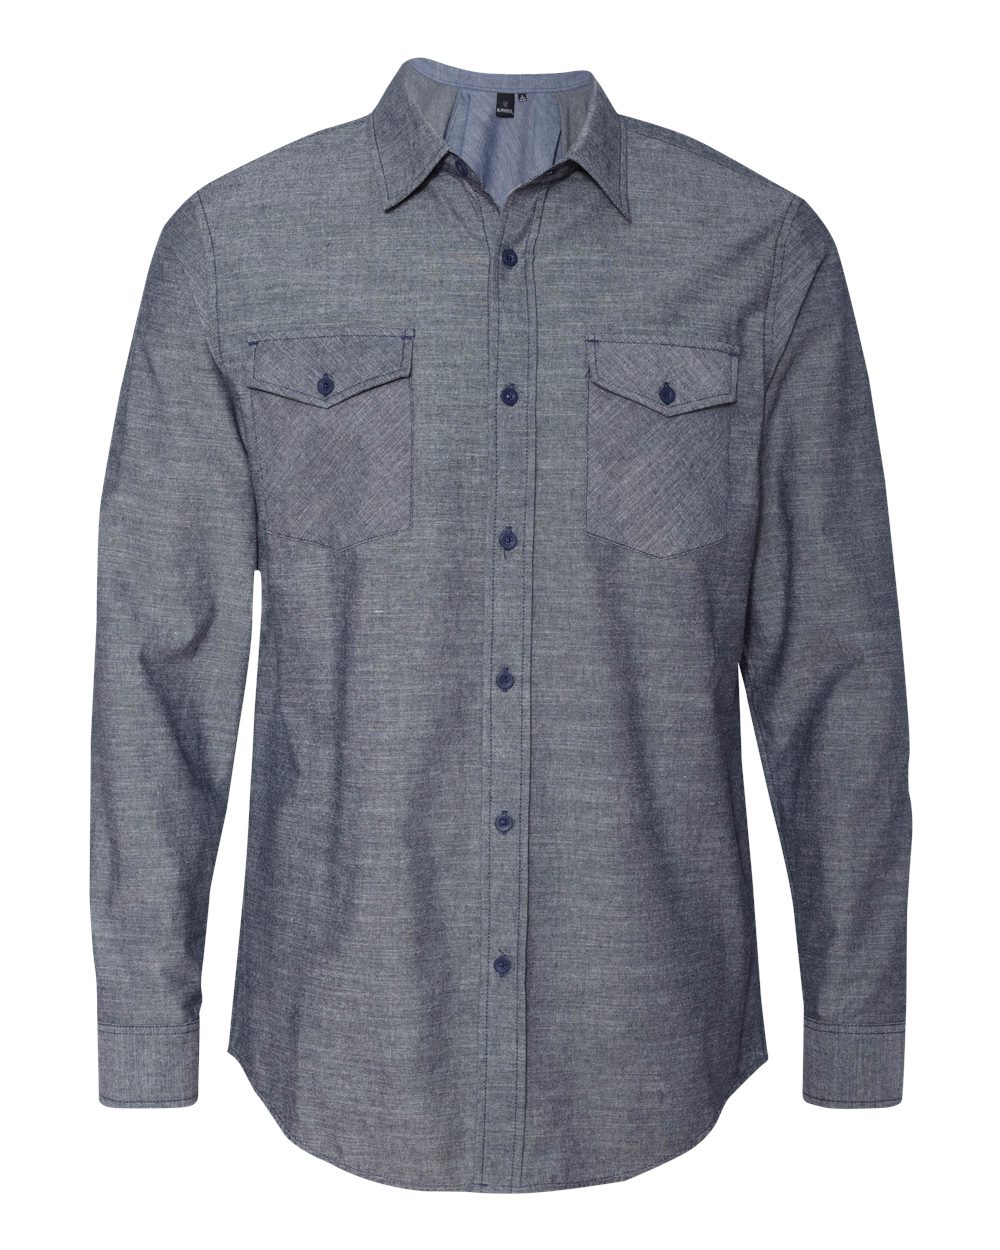 Burnside Mens Chambray Long Sleeve Pocket Shirt 8255 up to 3XL | eBay